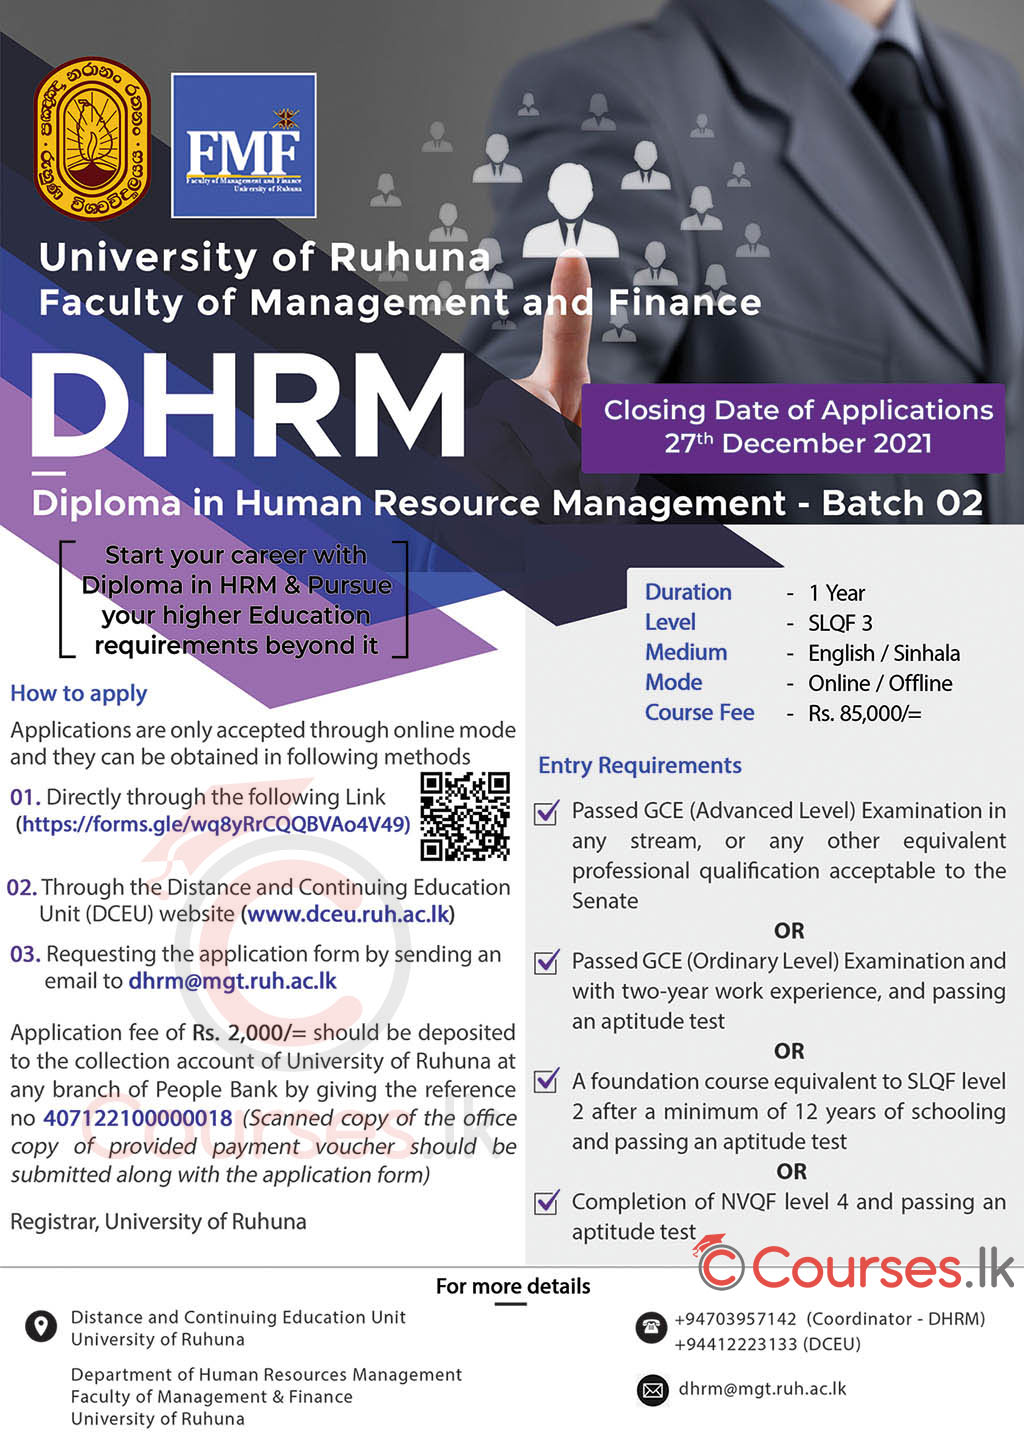 Diploma in Human Resource Management (DHRM) 2021/2022 - University of Ruhuna